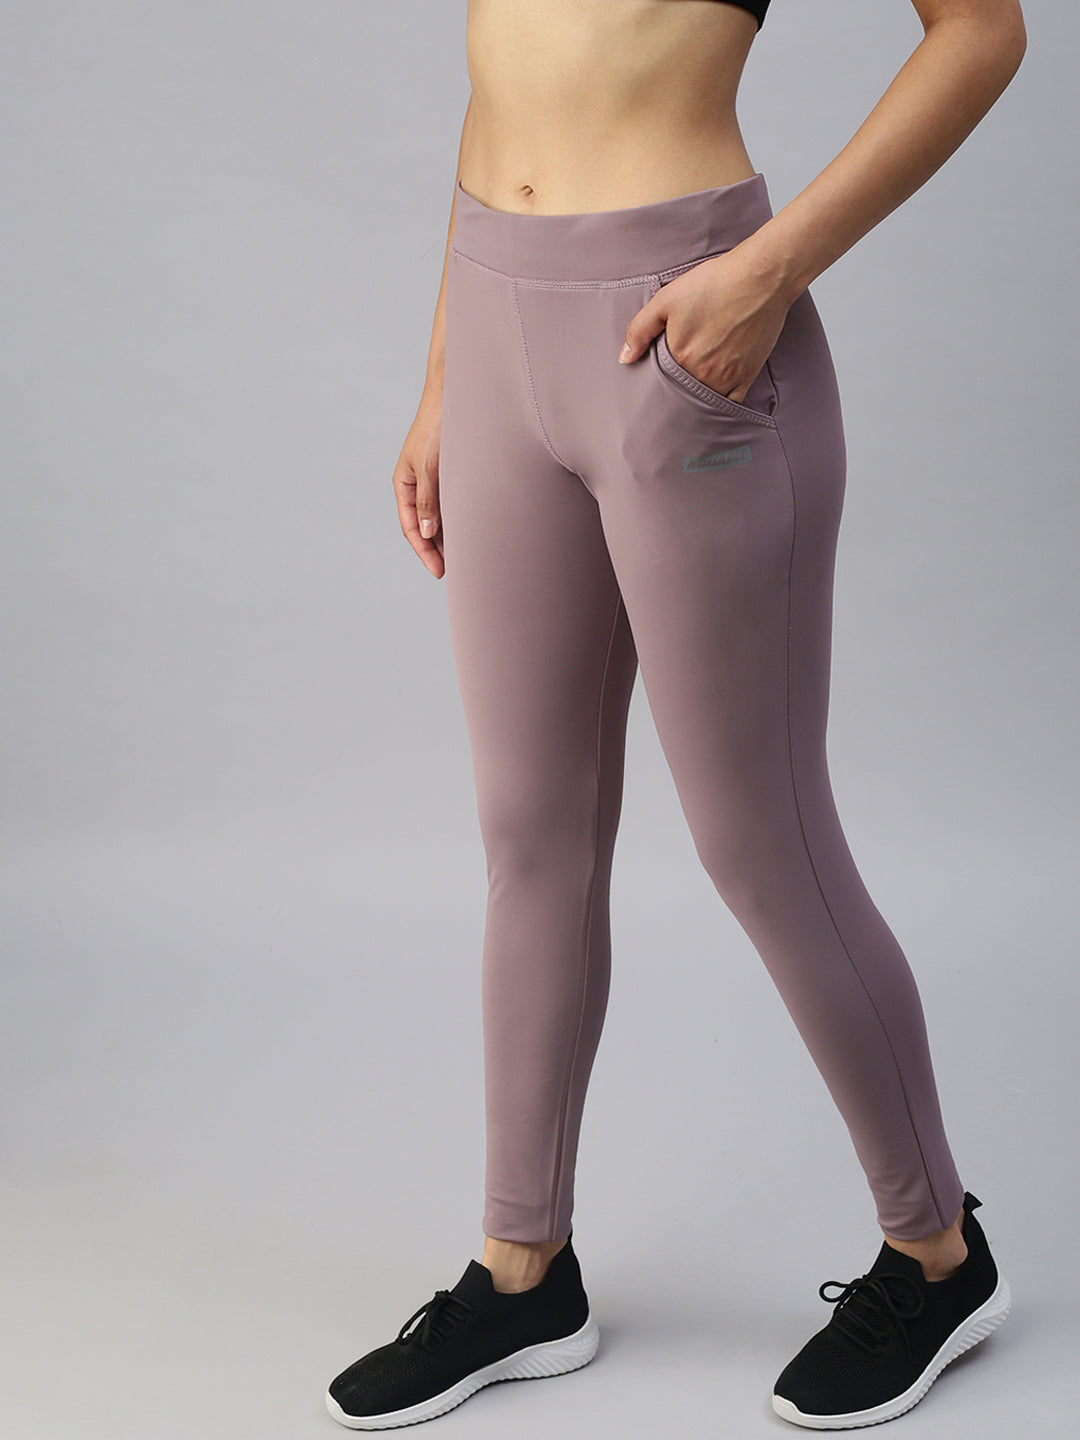 Women's Purple Solid Track Pants